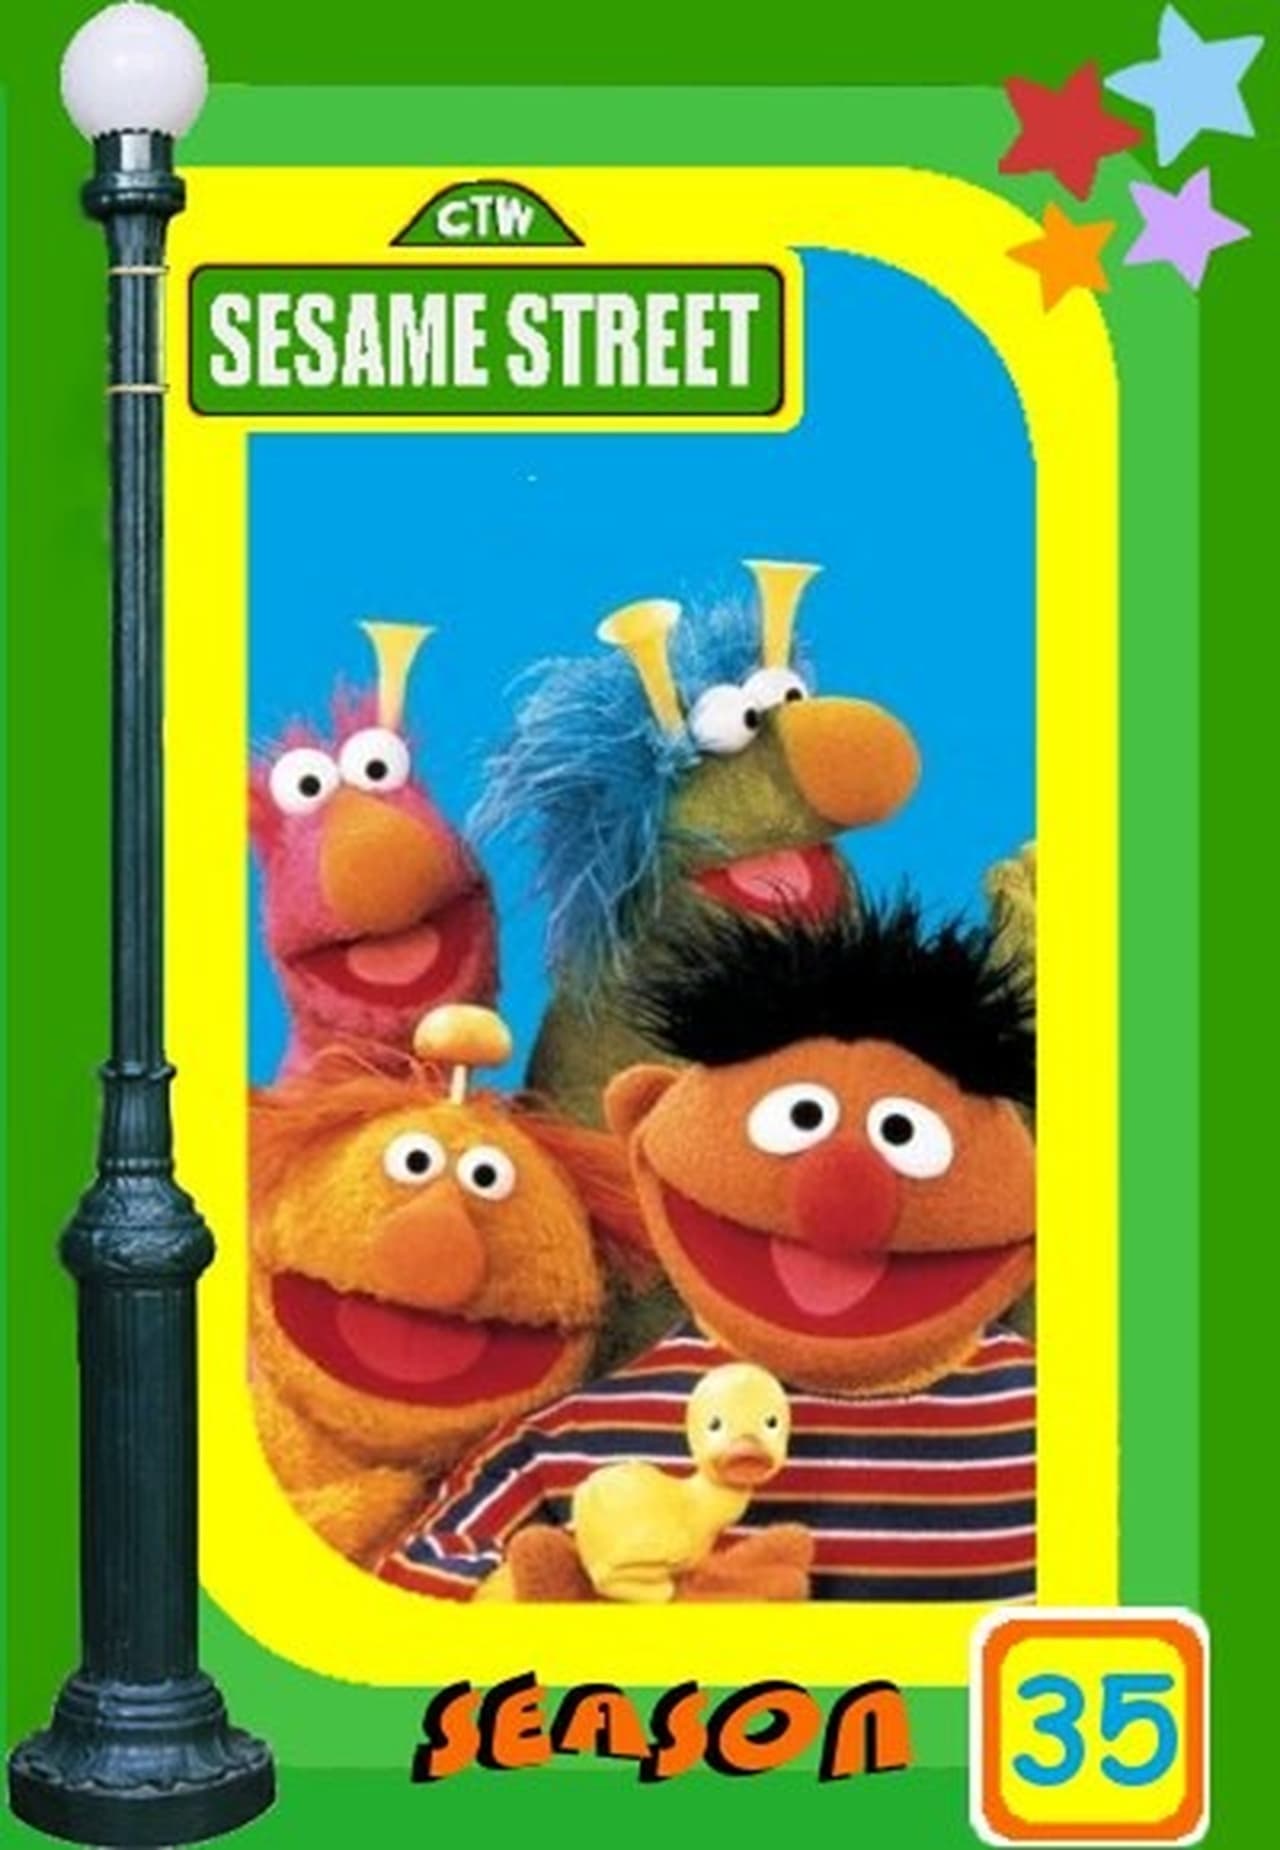 Sesame Street Season 35